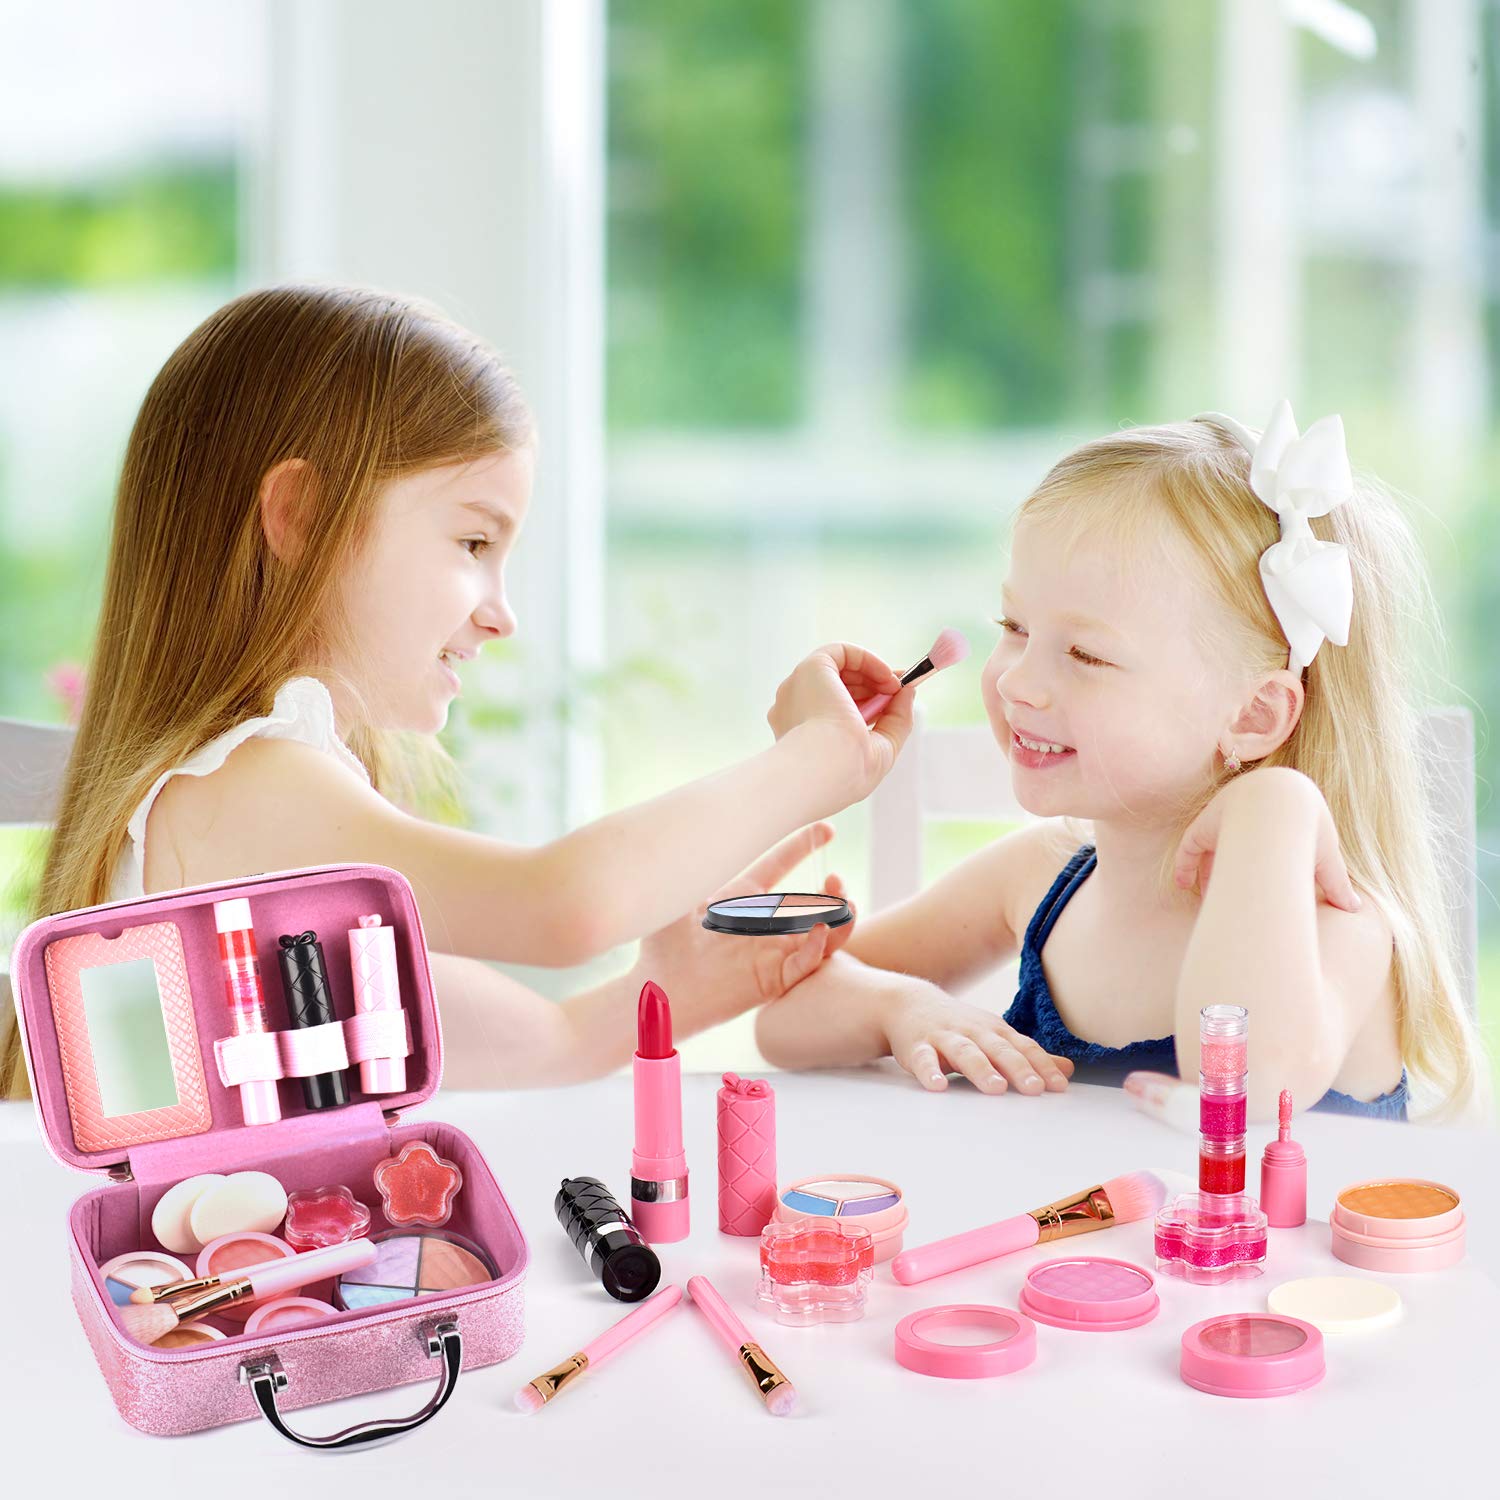 Bakeling Kids Makeup Kit for Girl,21 Pcs Girls Makeup Kit for Kids Age 8-12,Maquillaje Para Niñas,Kids Makeup Kit for Girl Washable Cosmetics Safe & Non-Toxic Makeup for kids,Makeup Toys for Game/Gift